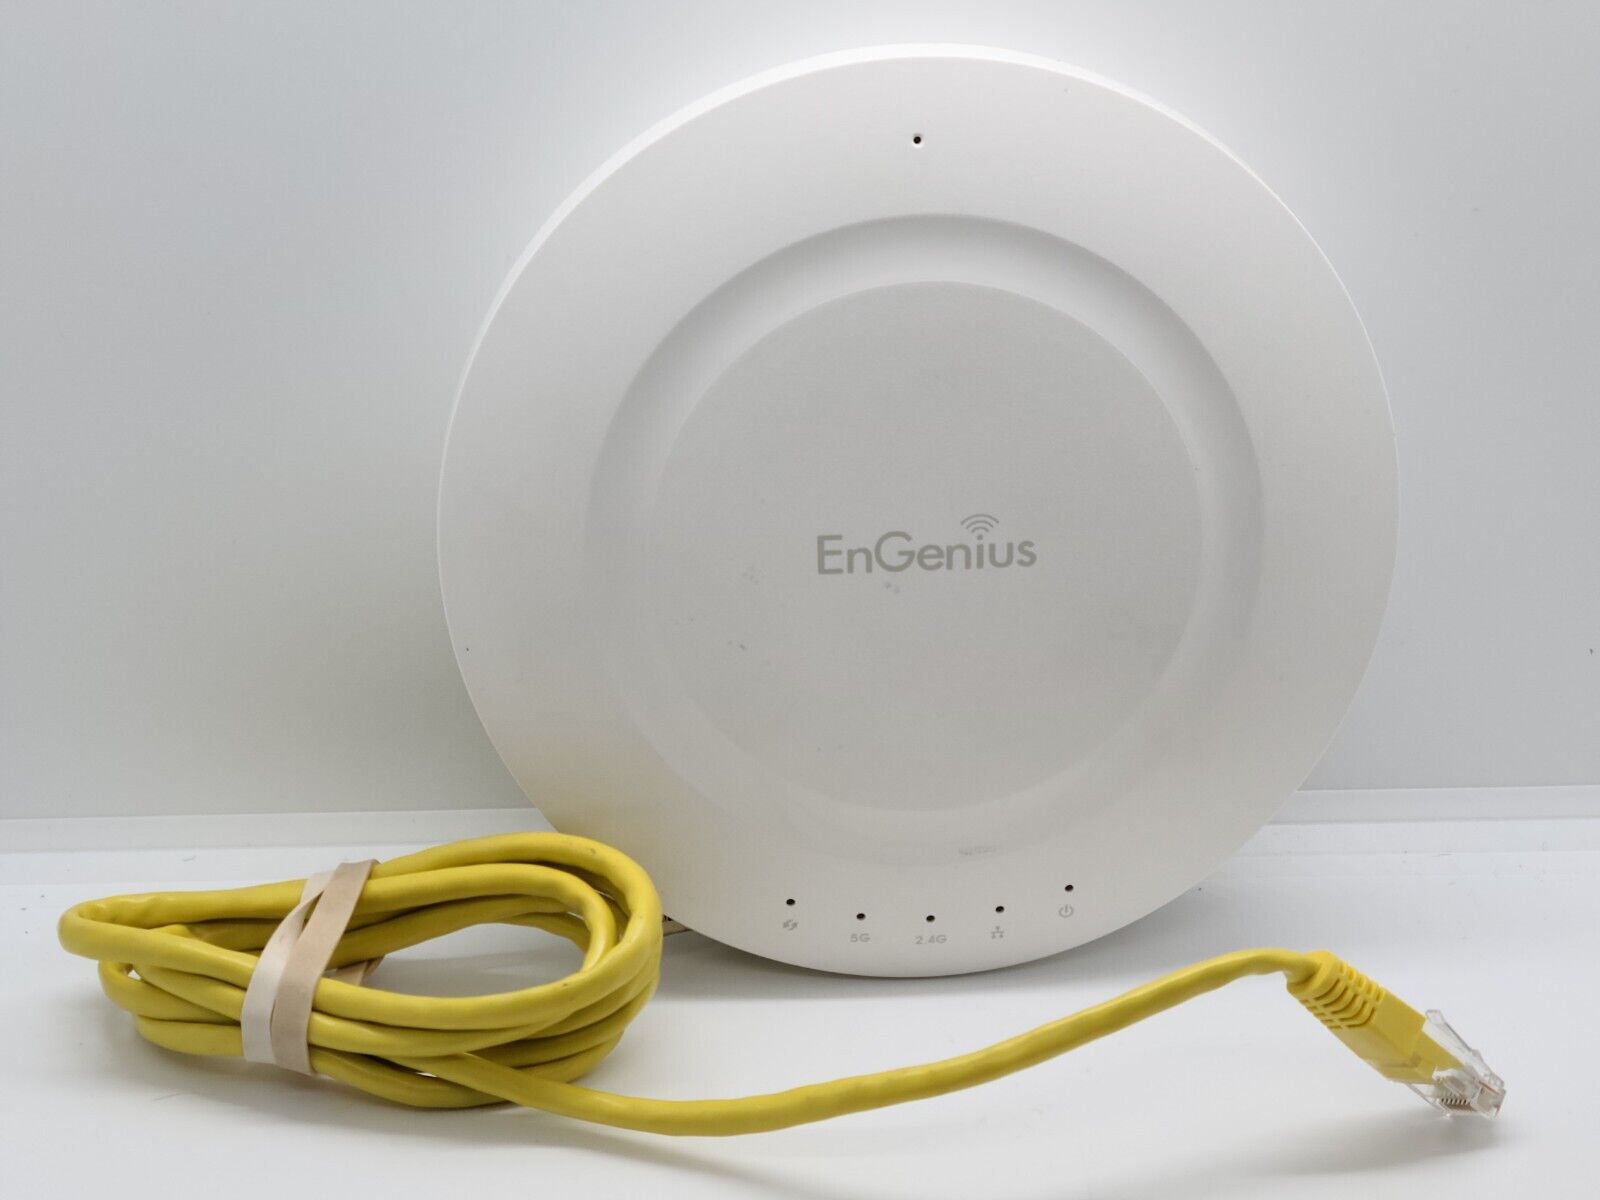 EnGenius EAP600 Wireless Access Point